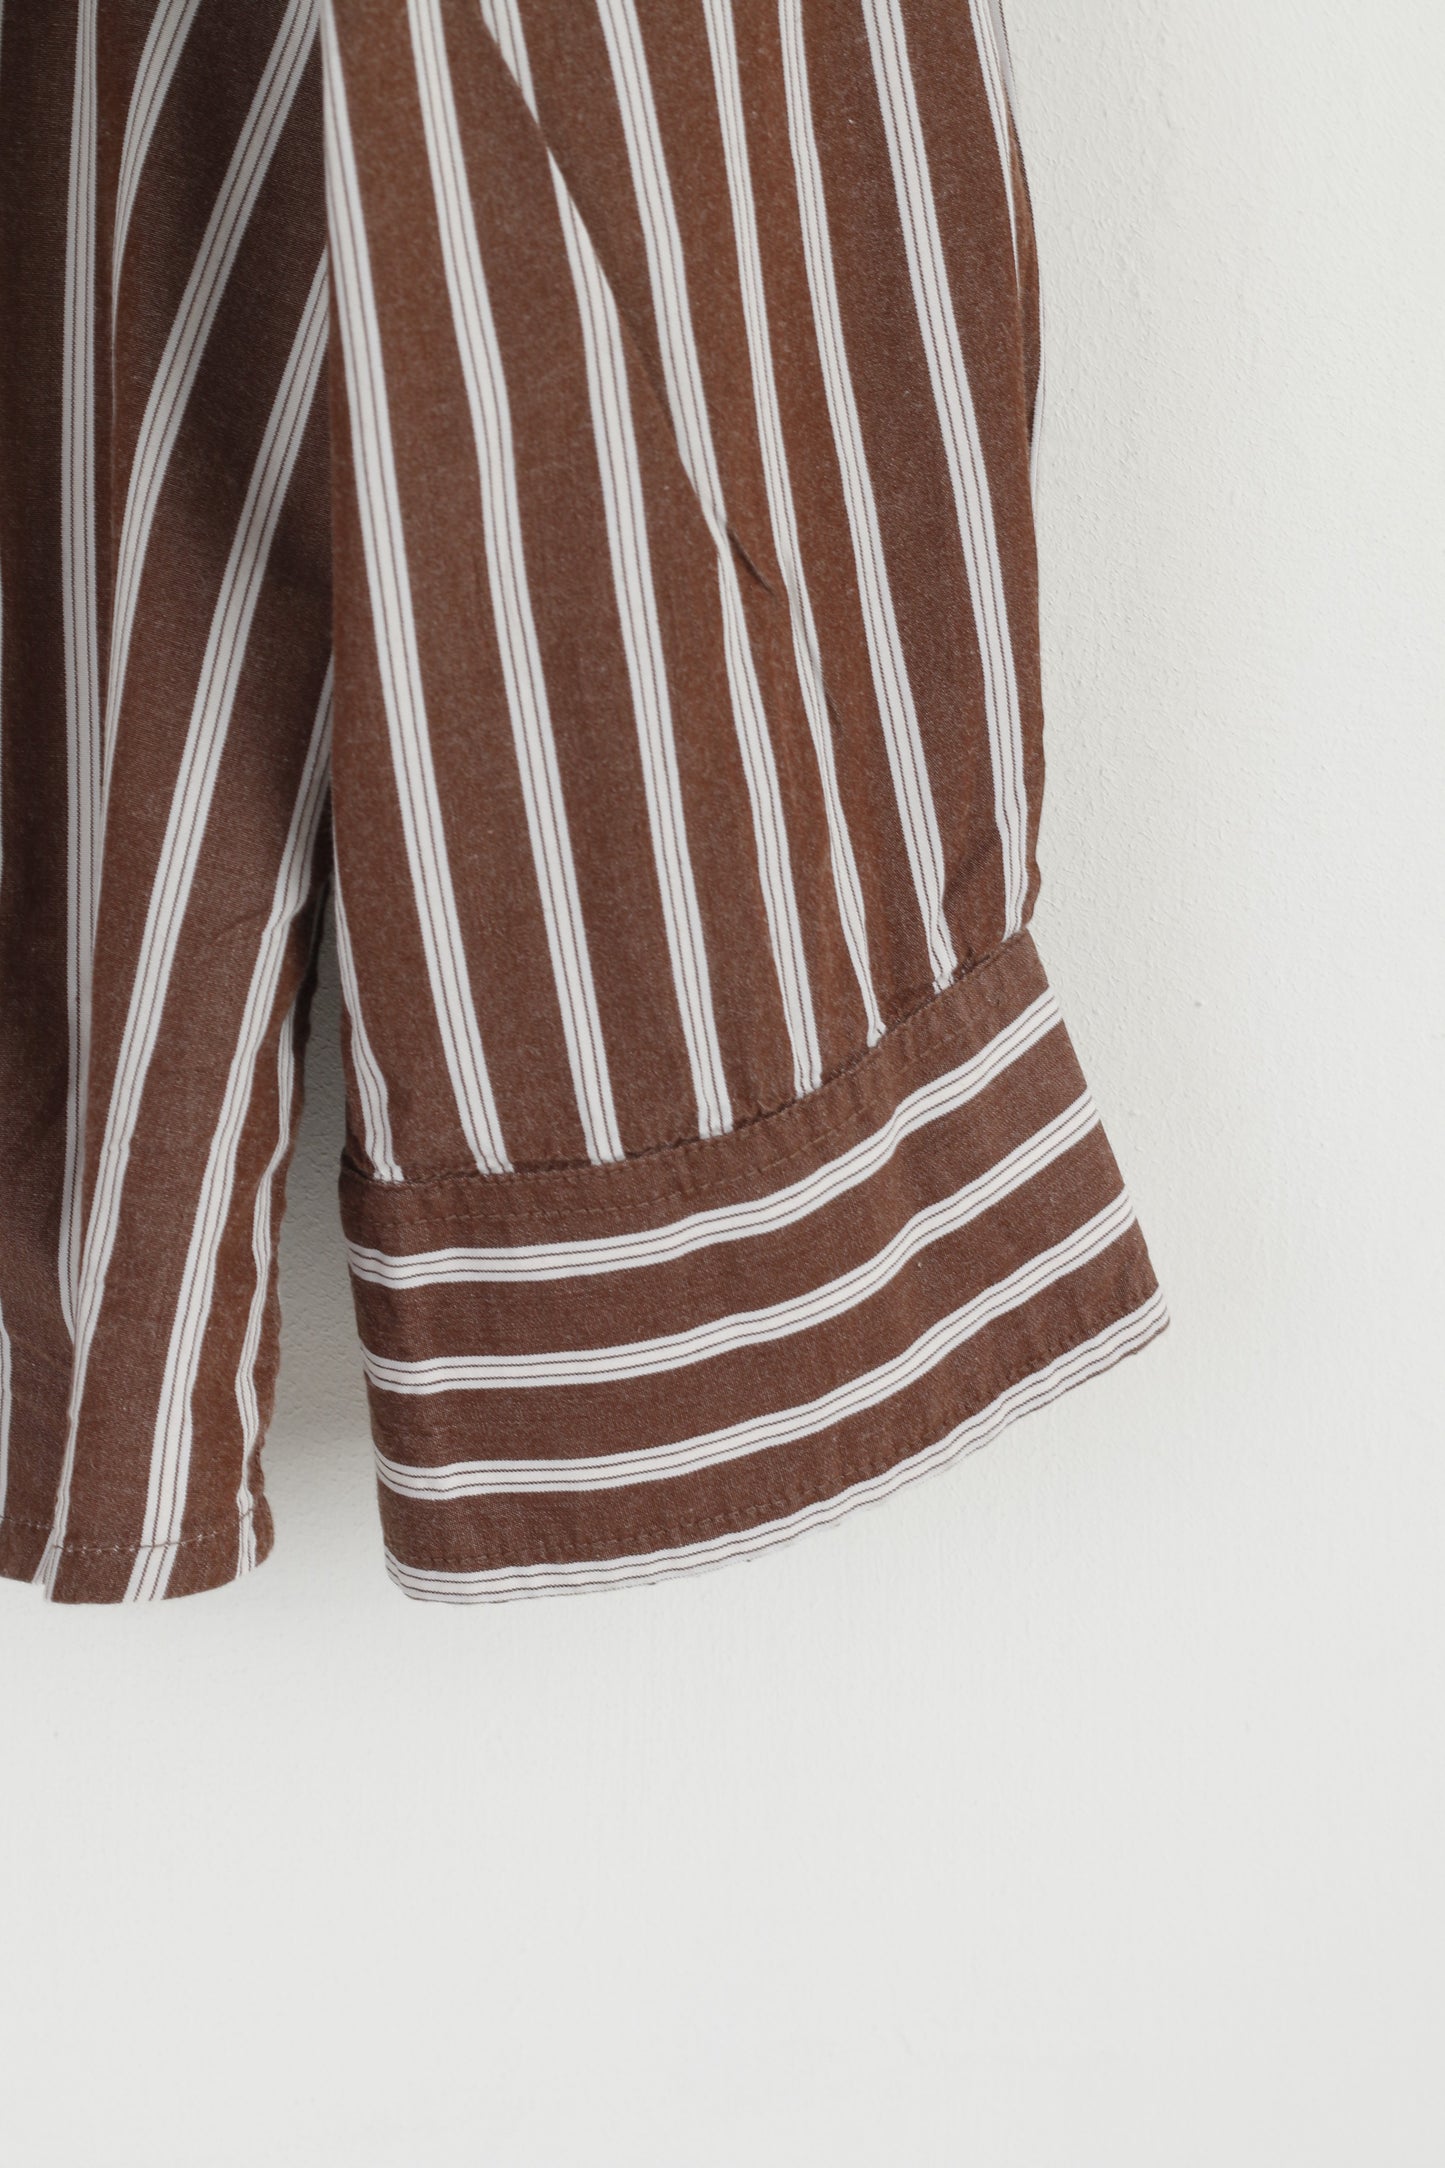 Joe Brown Men XL (XXL) Casual Shirt Brown White Striped Cotton Long Sleeve Top